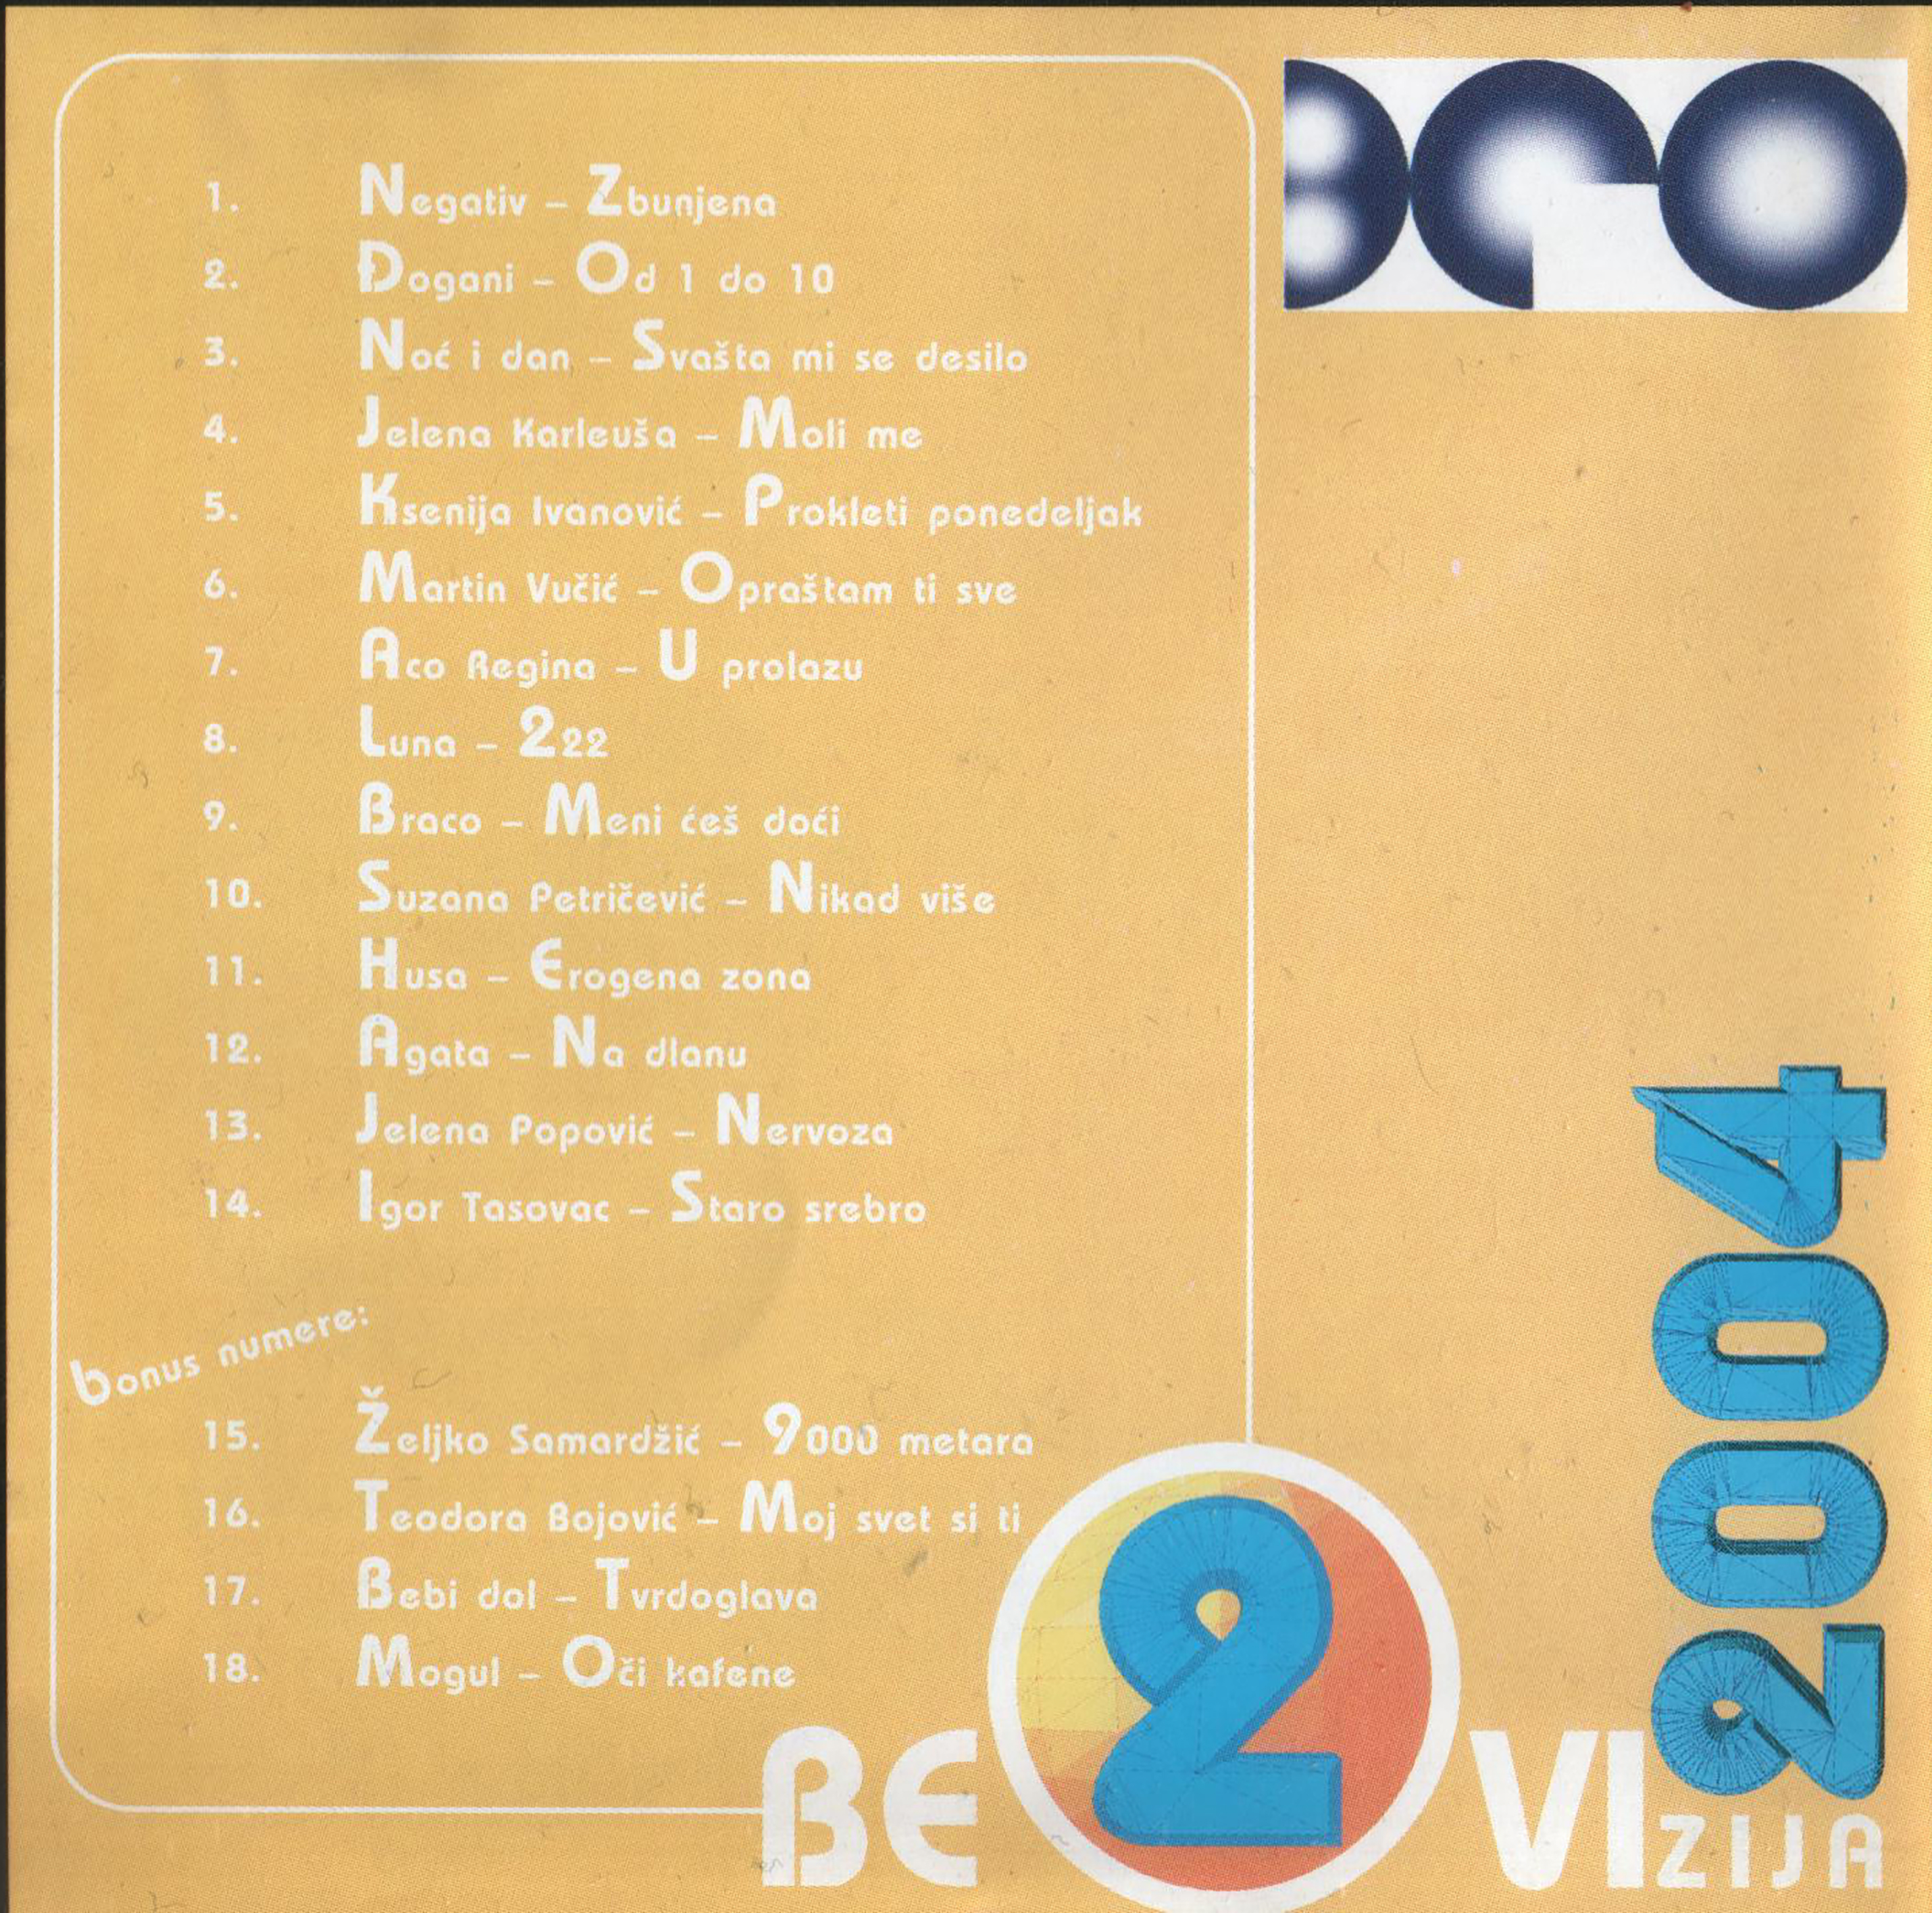 Beovizija 2004 CD 2 1 b